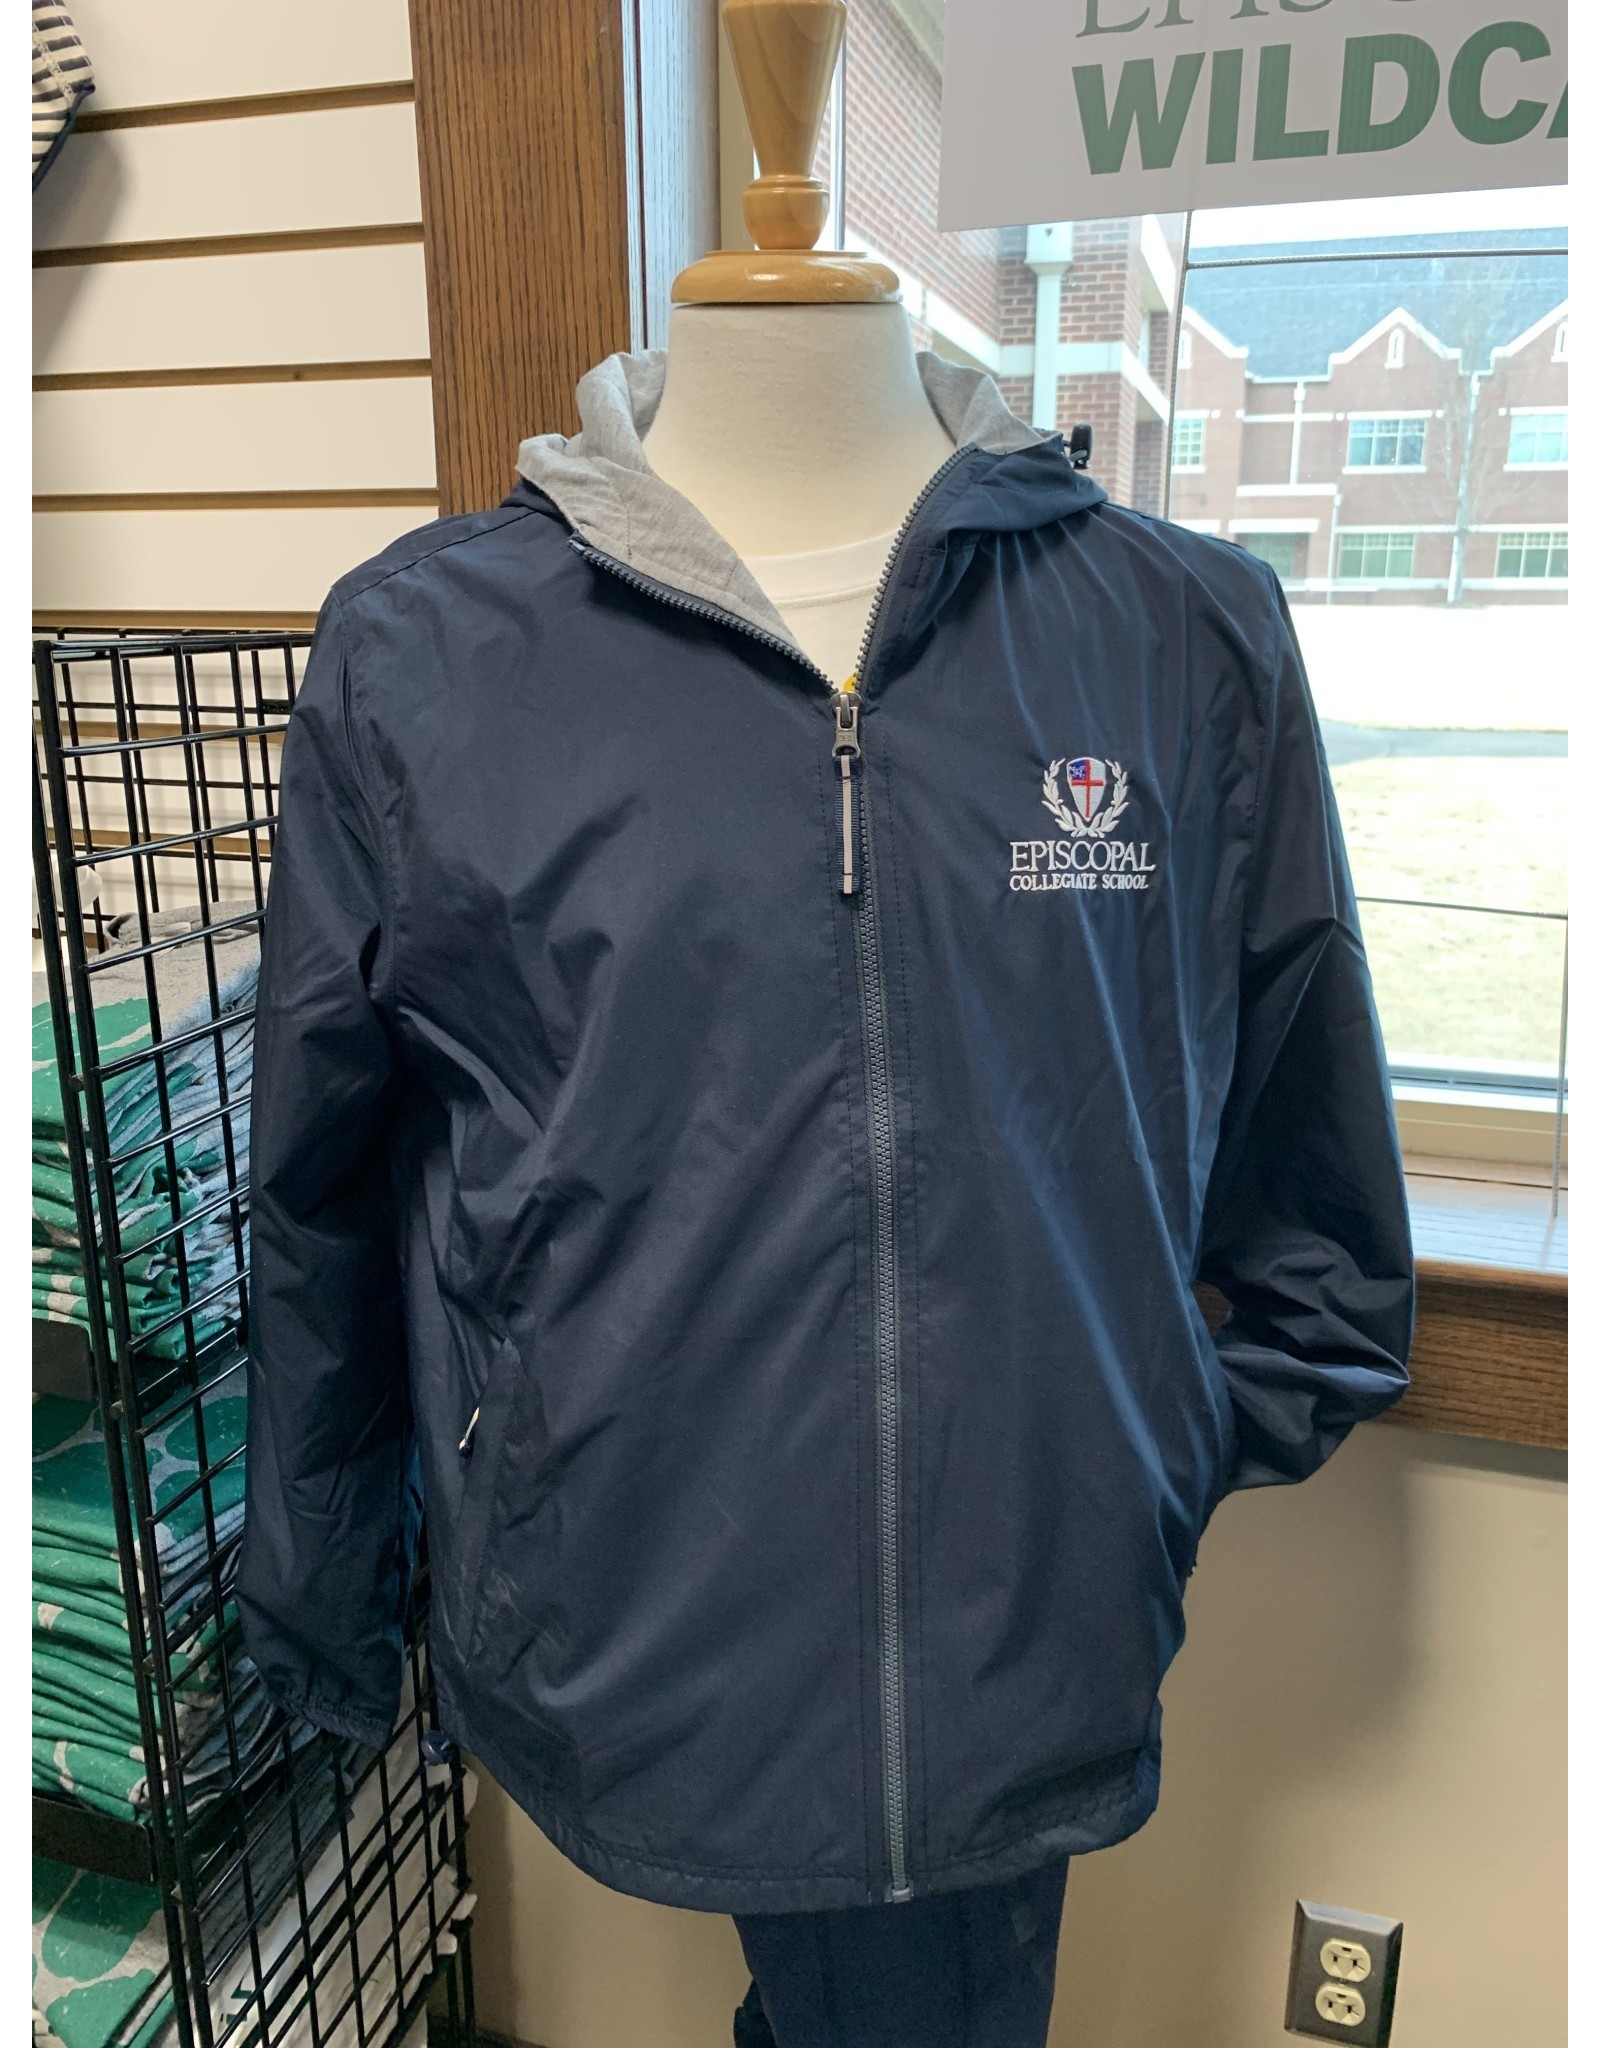 Crest Logo Portsmouth Jacket, Lined Windbreaker Raincoat, Full-Zip -  Wildcat Warehouse at Episcopal Collegiate